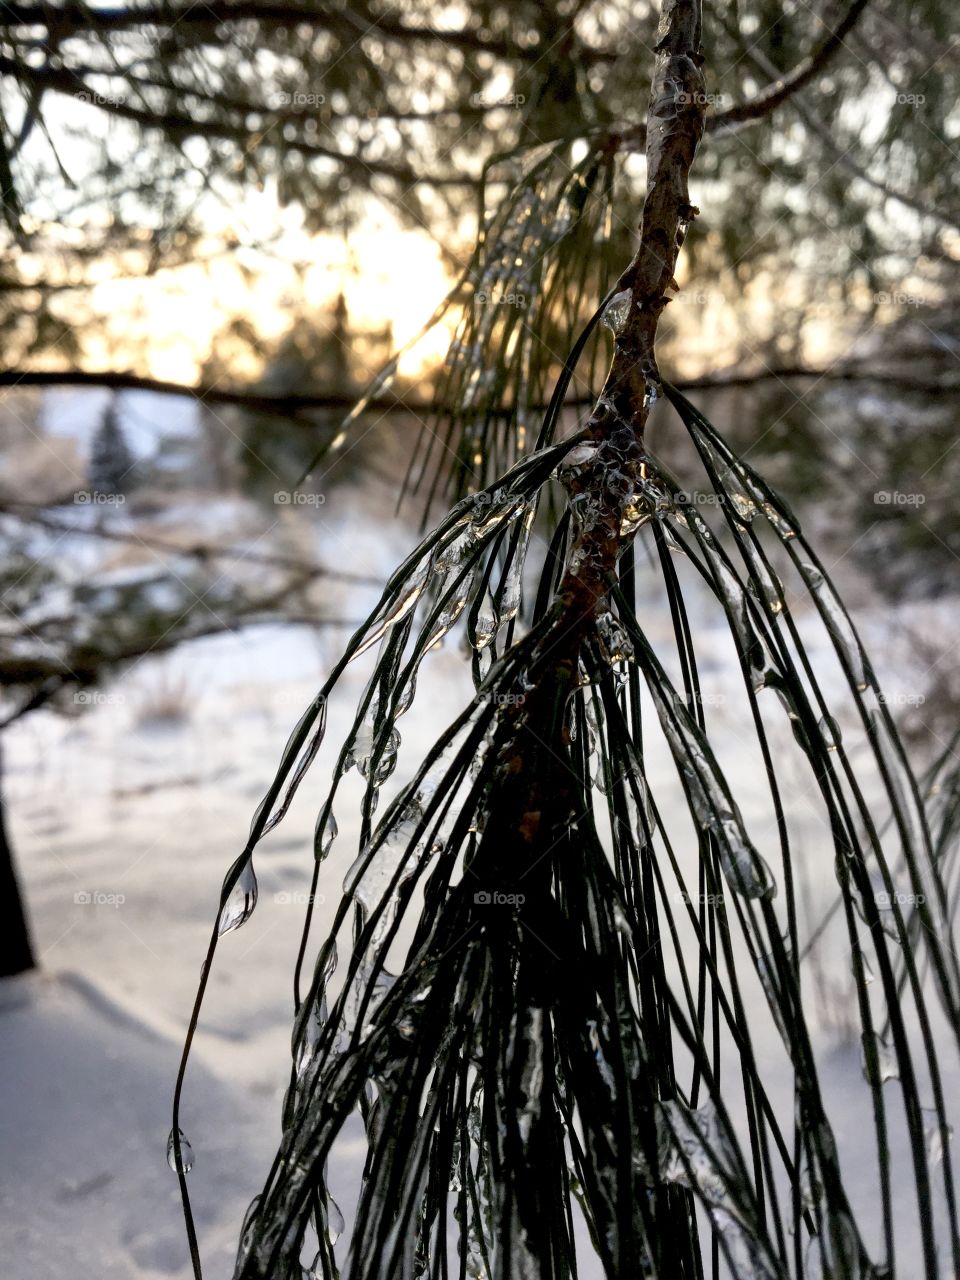 Snow melting on pine branch 